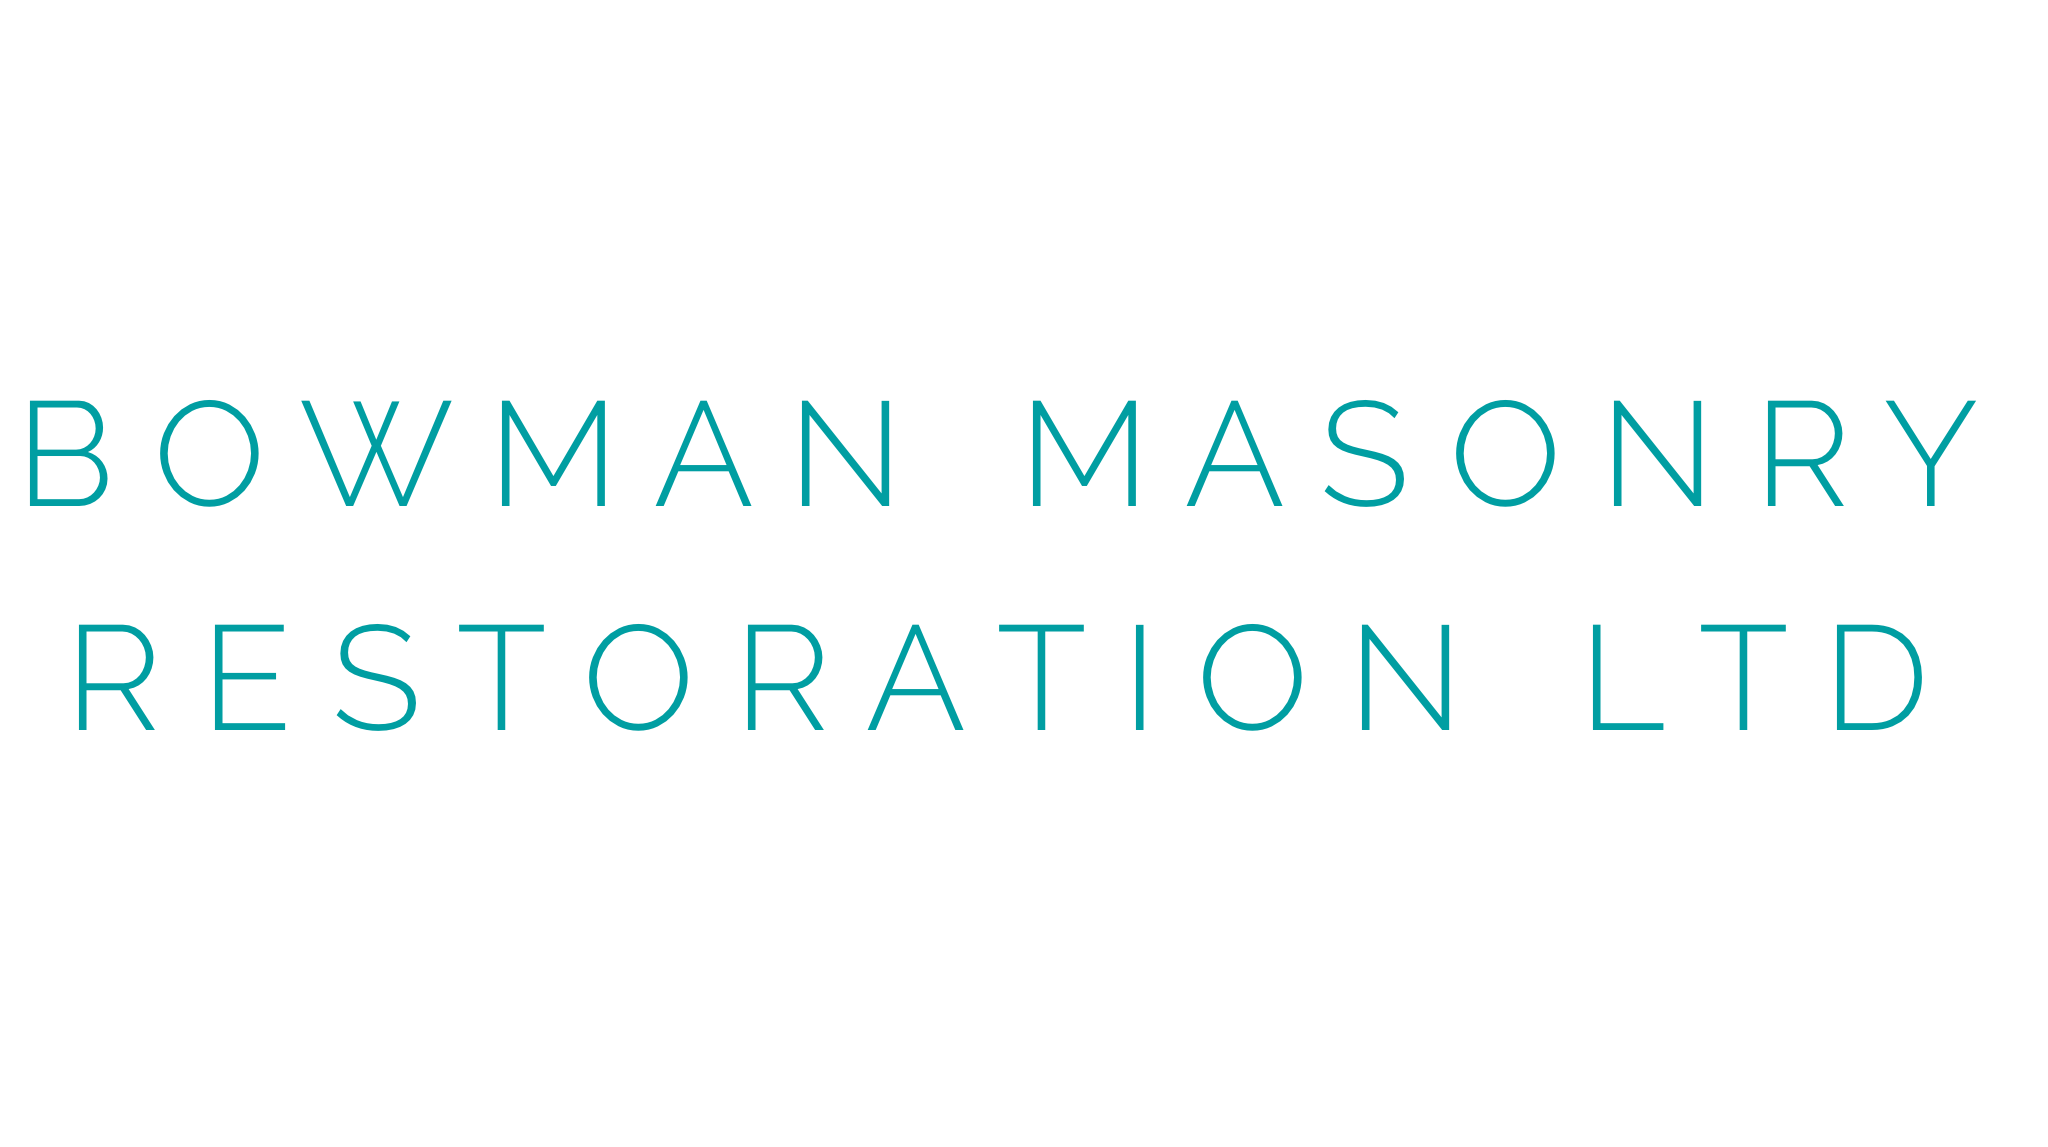 Bowman Masonry Restoration Ltd's logo